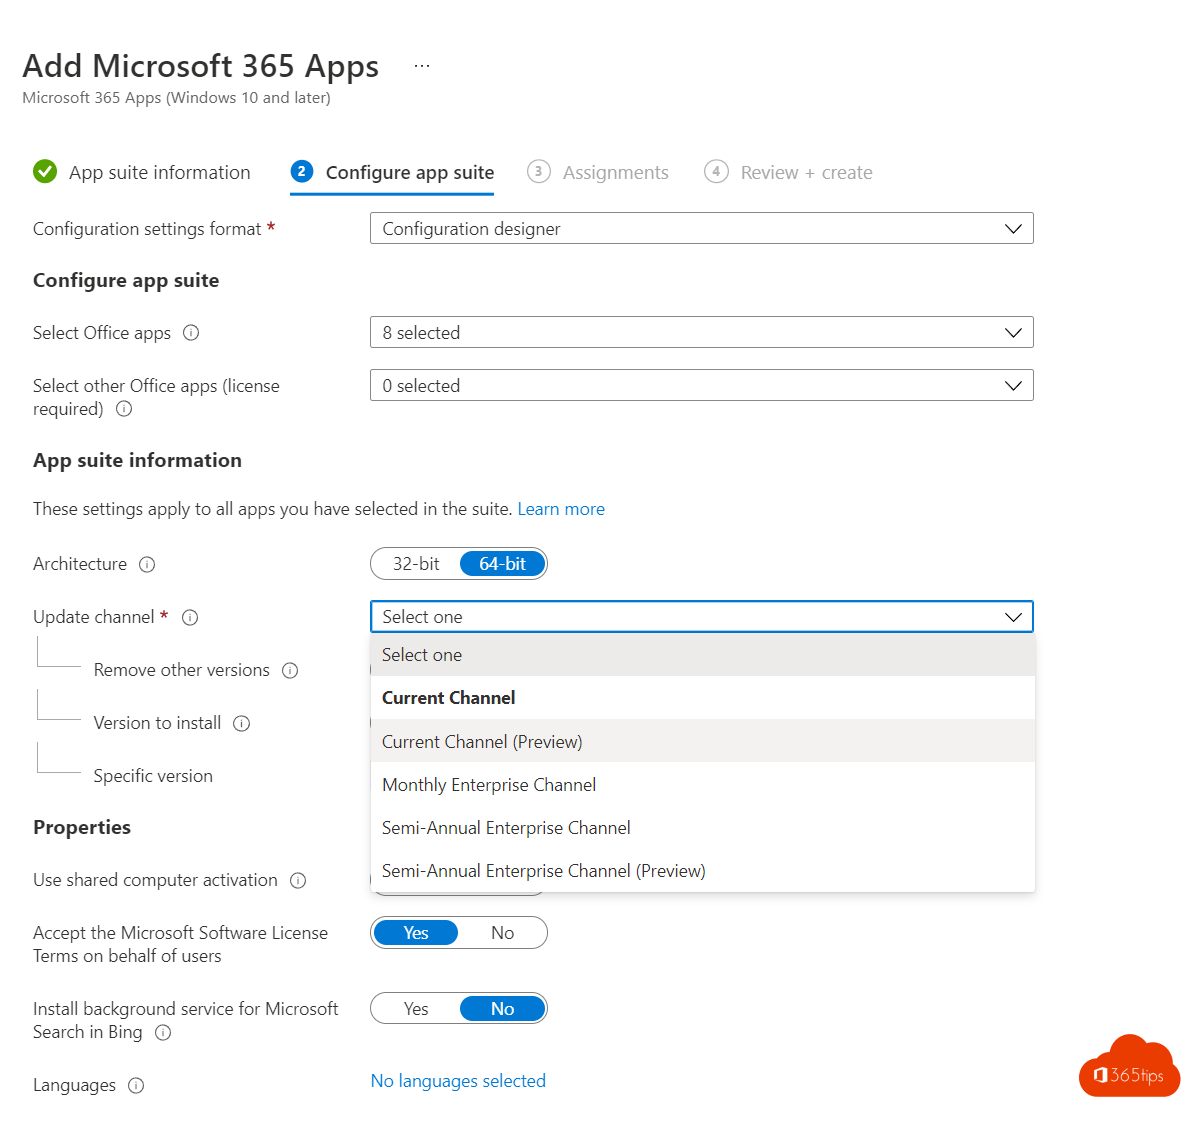 Despliegue de Microsoft 365 Apps con Endpoint manager en 8 pasos